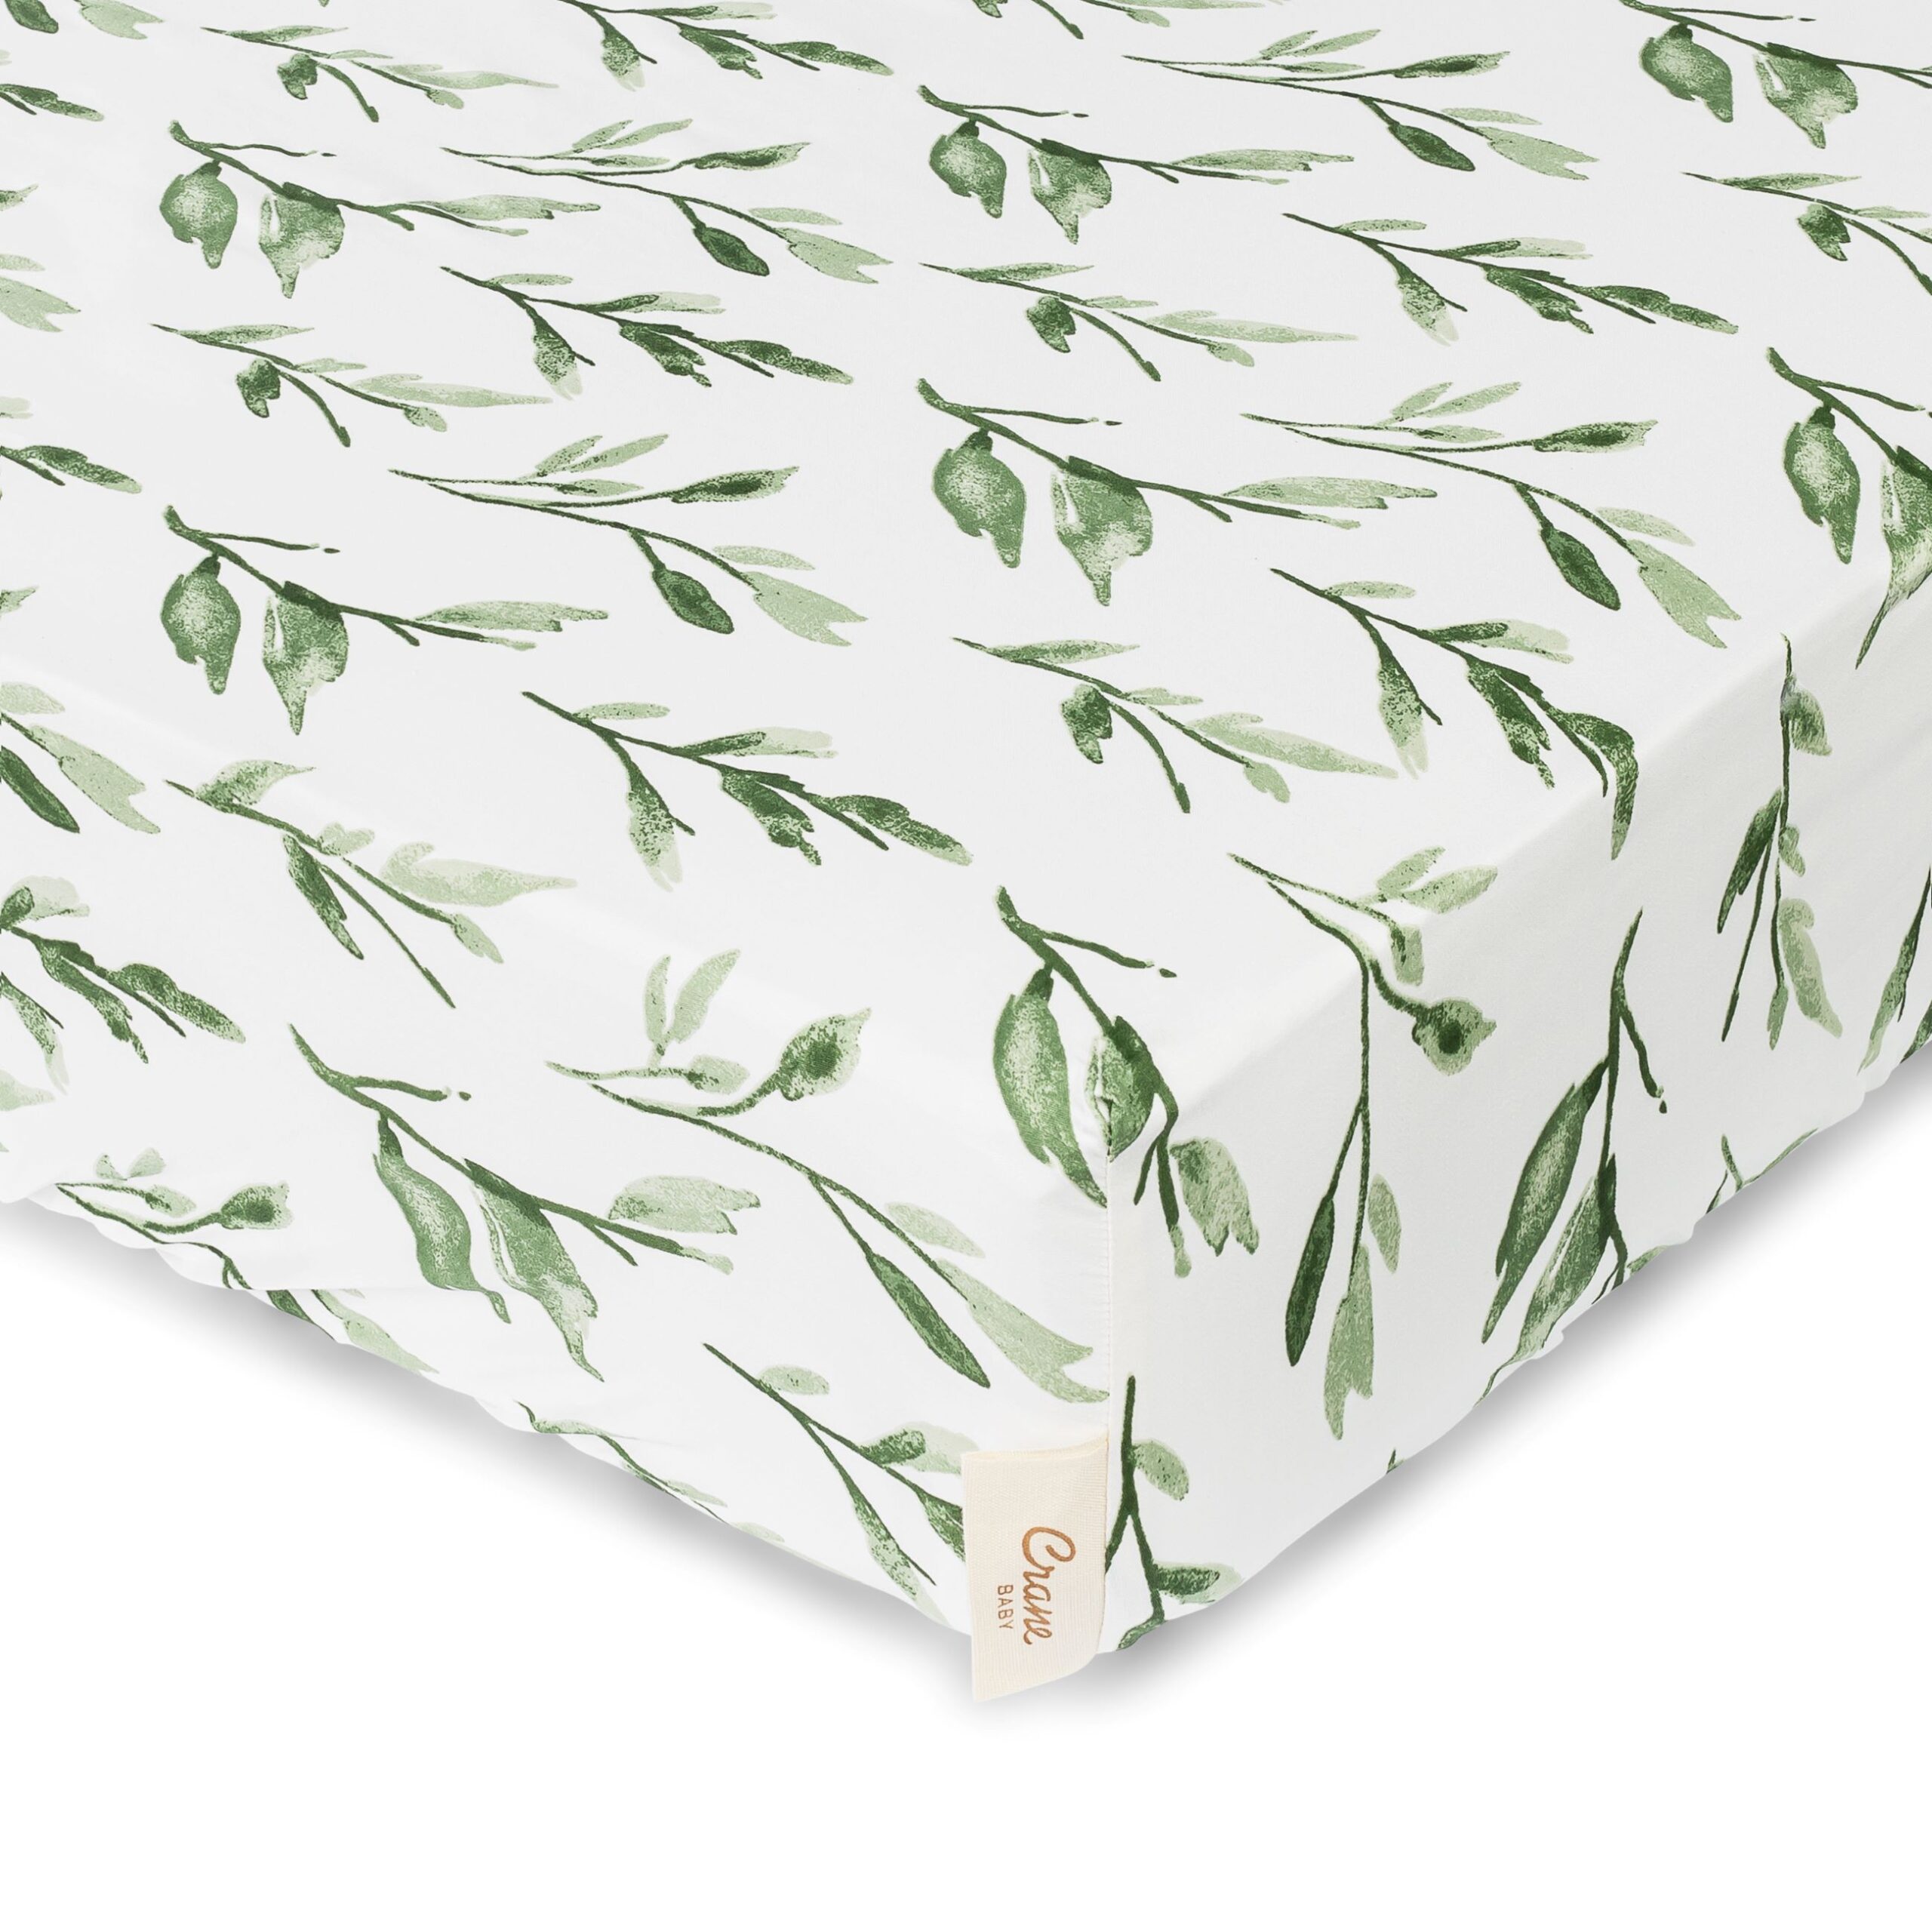 Crib sheet with leaf design on white background